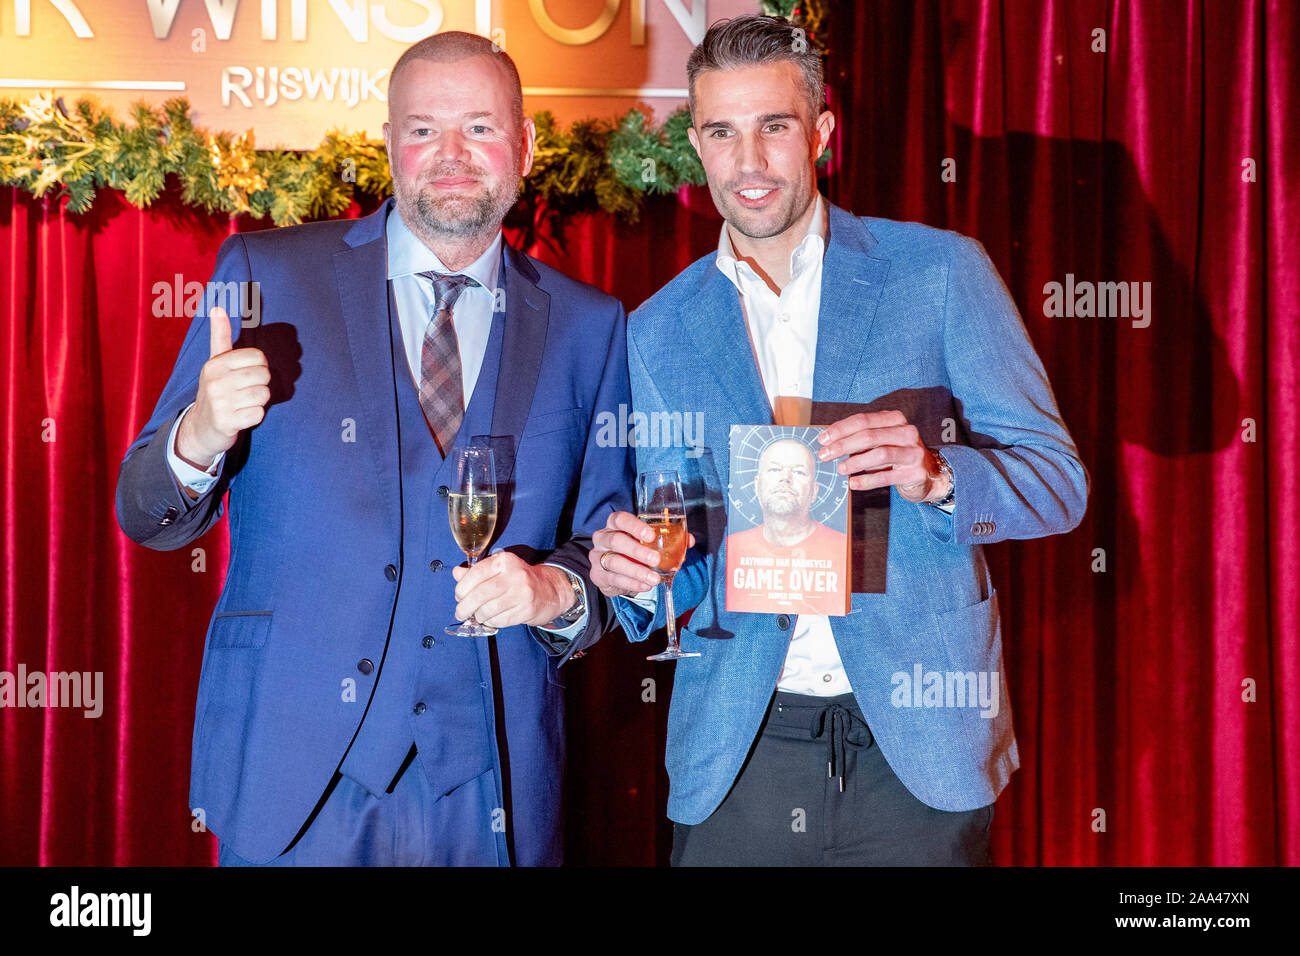 Rijswijk, Netherlands. 19th Nov, 2019. RIJSWIJK, Centre, 19-11-2019, Raymond van Barneveld at the launch party of his new book ‘Game Over'. Credit: Pro Shots/Alamy Live News Stock Photo